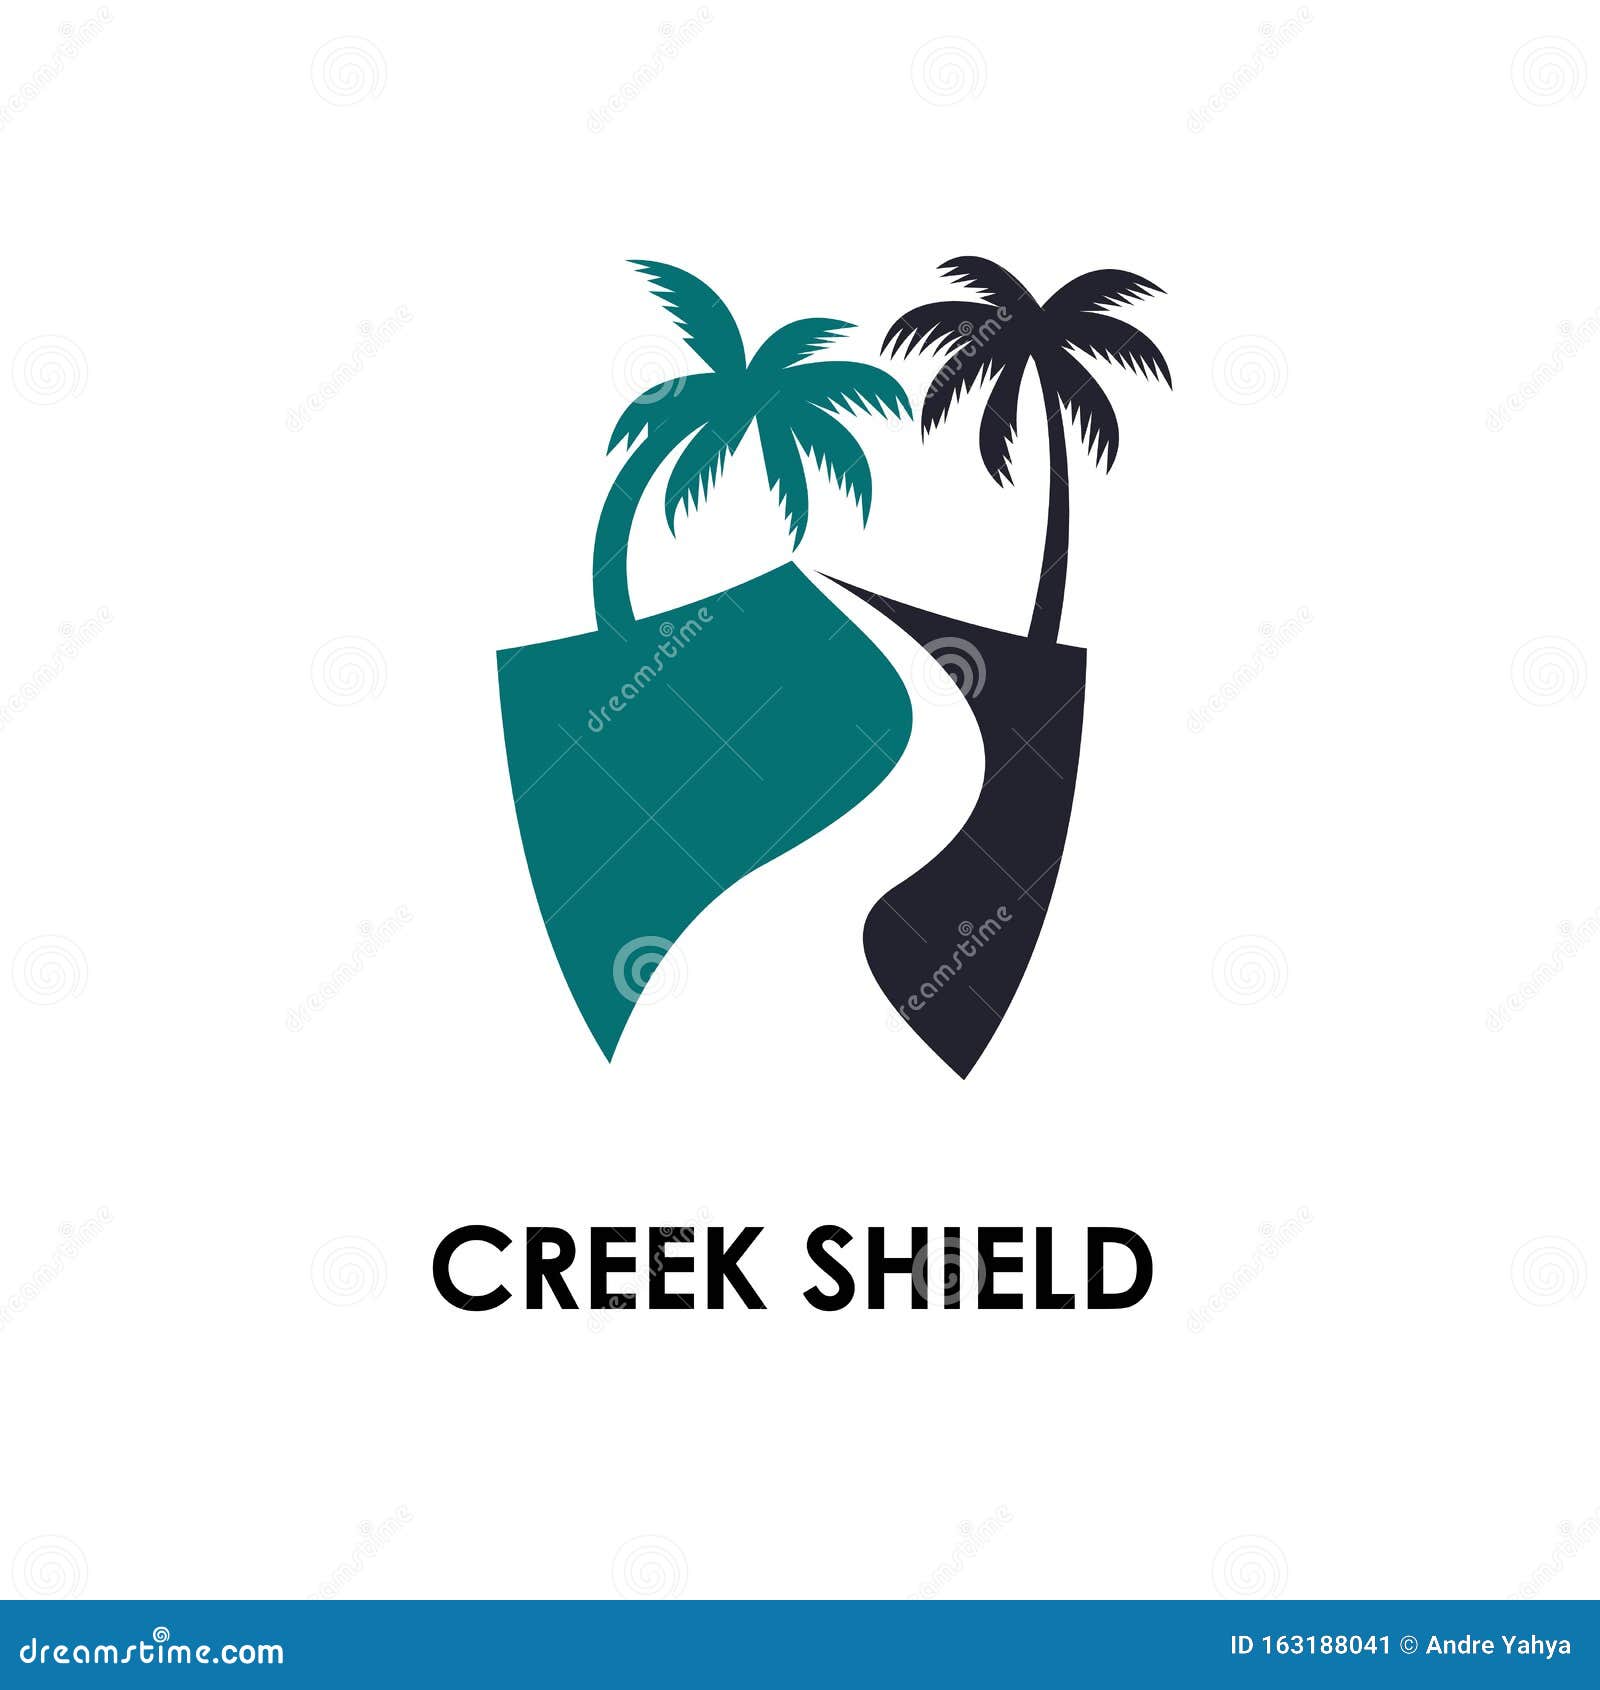 creek logo ideas 1